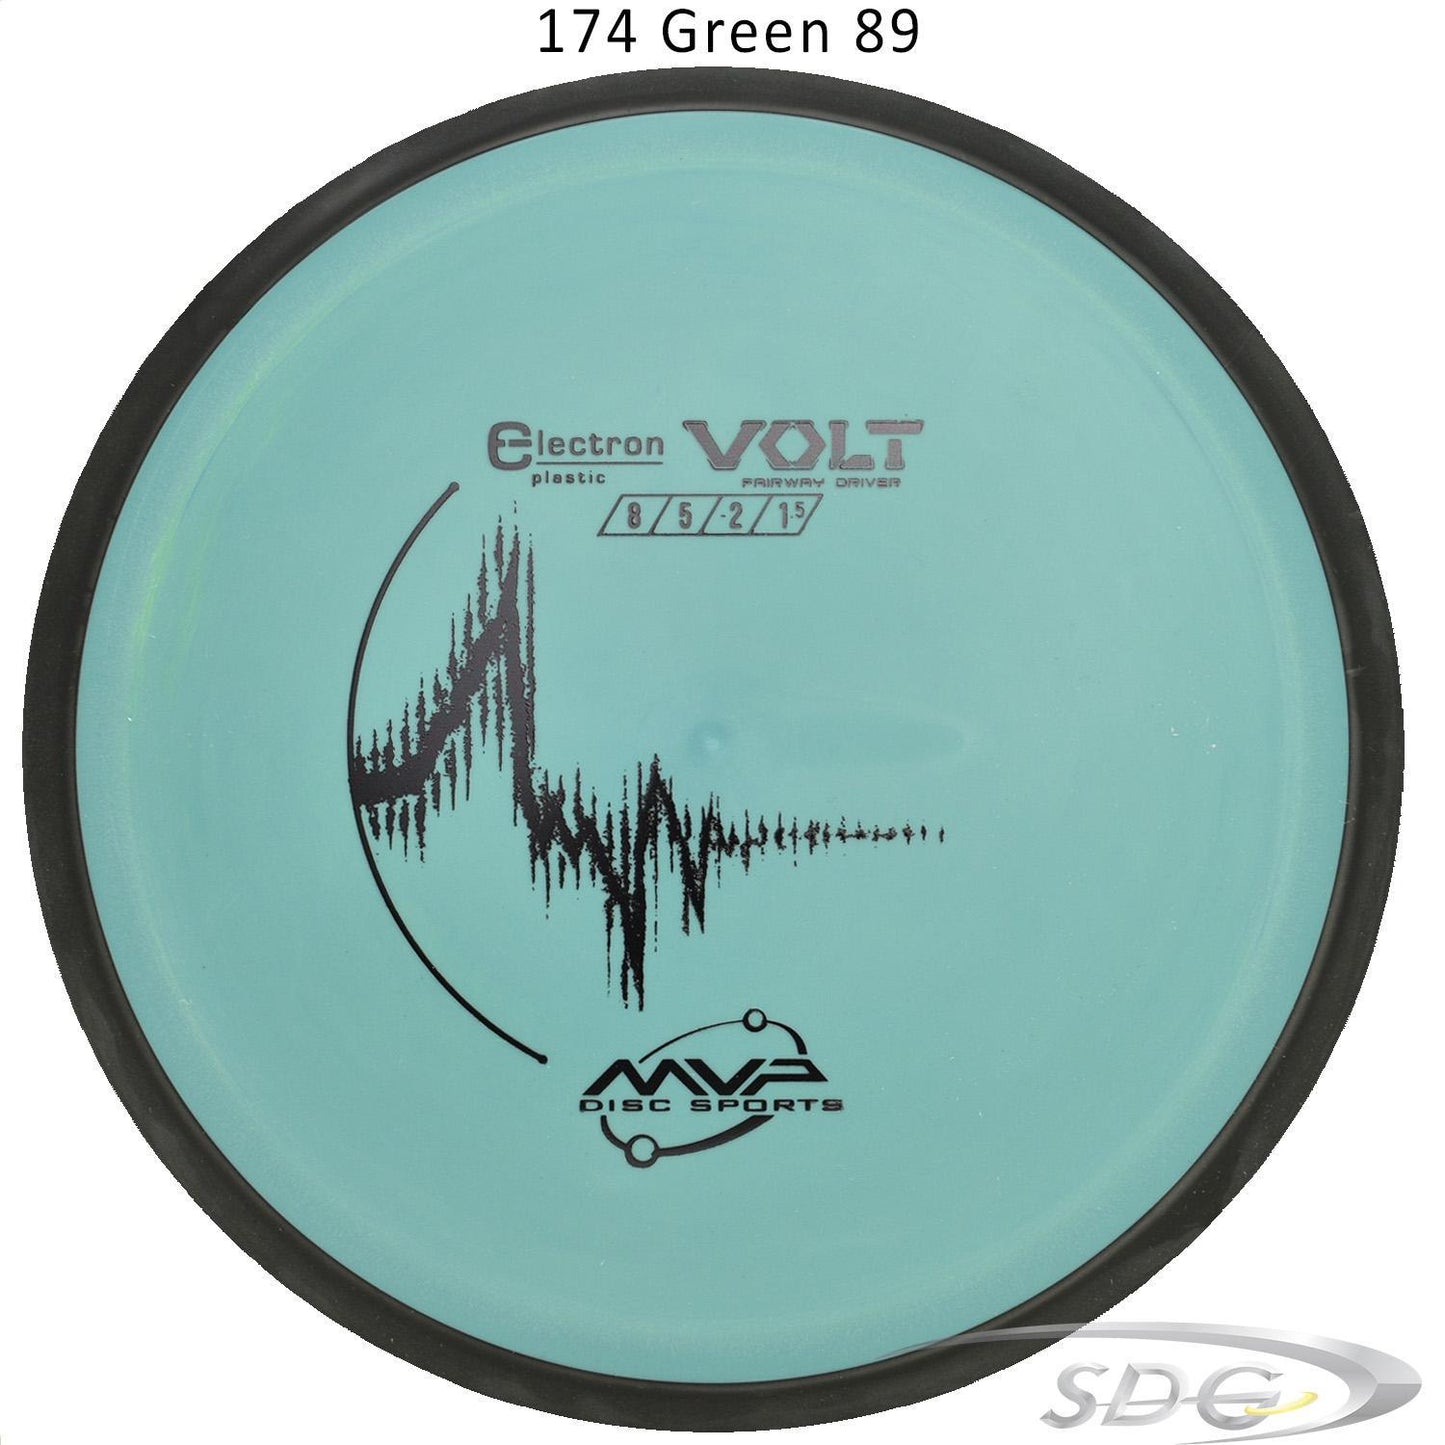 mvp-electron-volt-disc-golf-fairway-driver 174 Green 89 